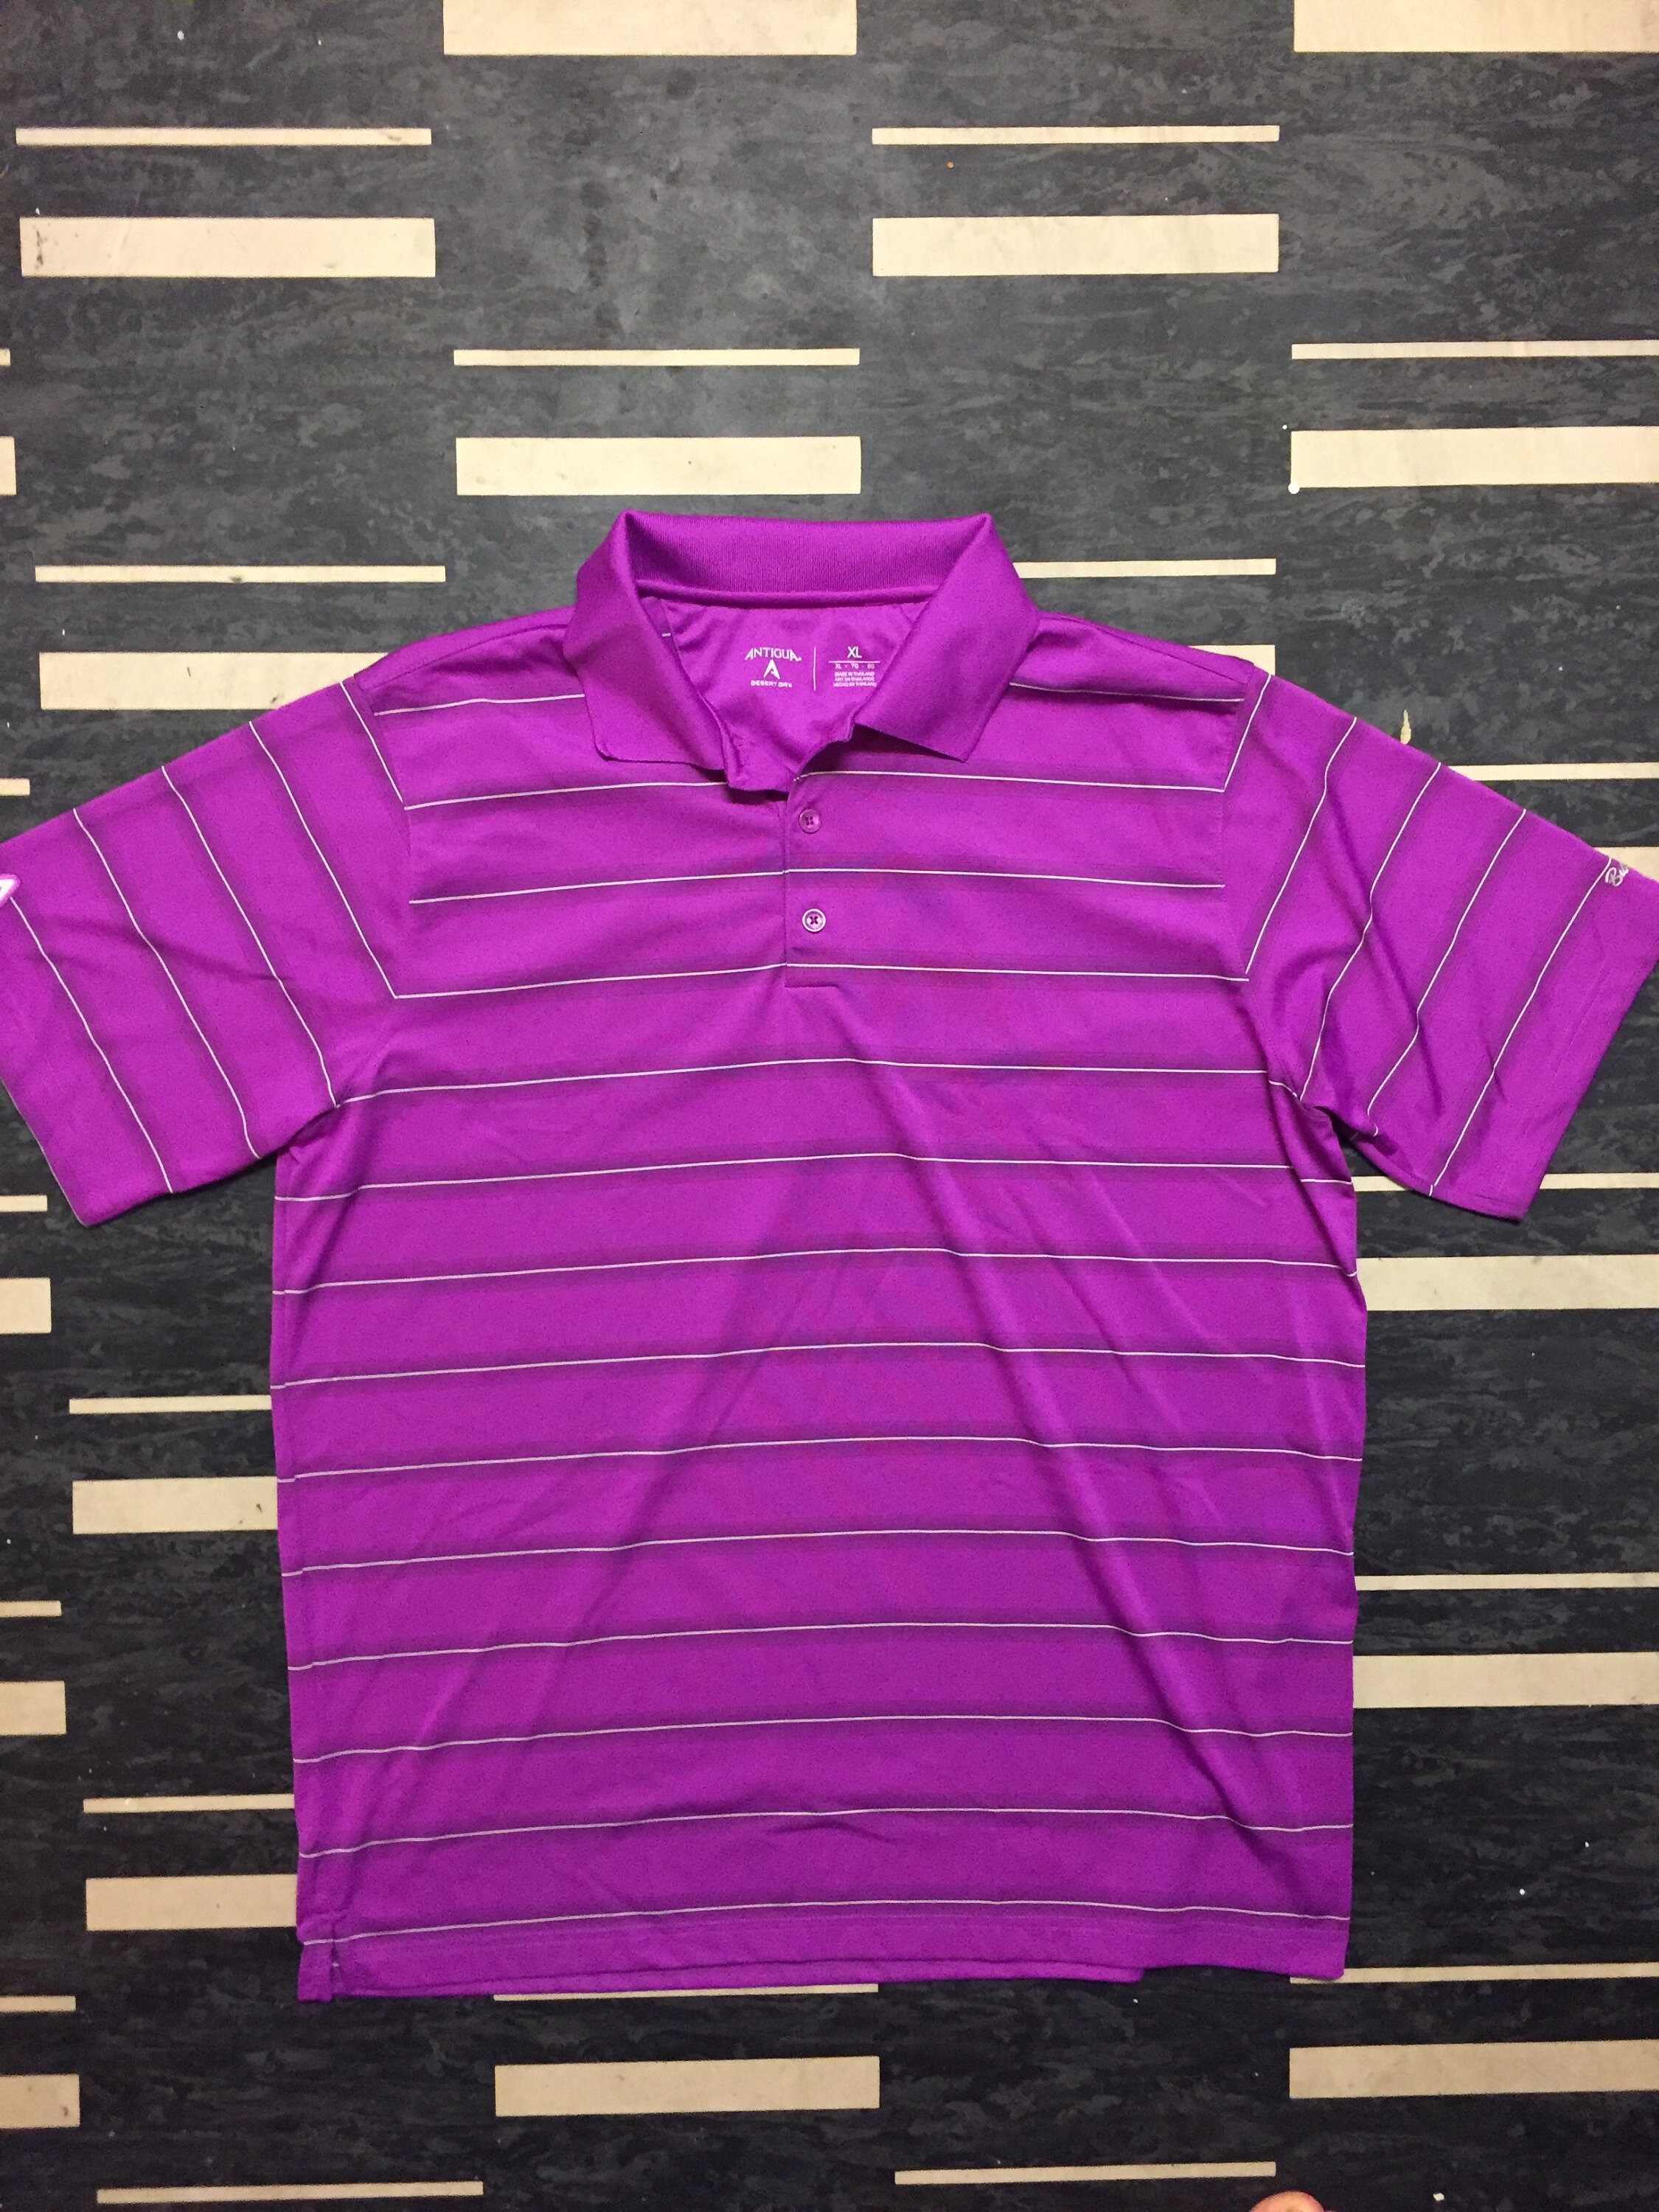 Mens XL Fuschia Striped Golf Shirt Polo Shirt | Etsy